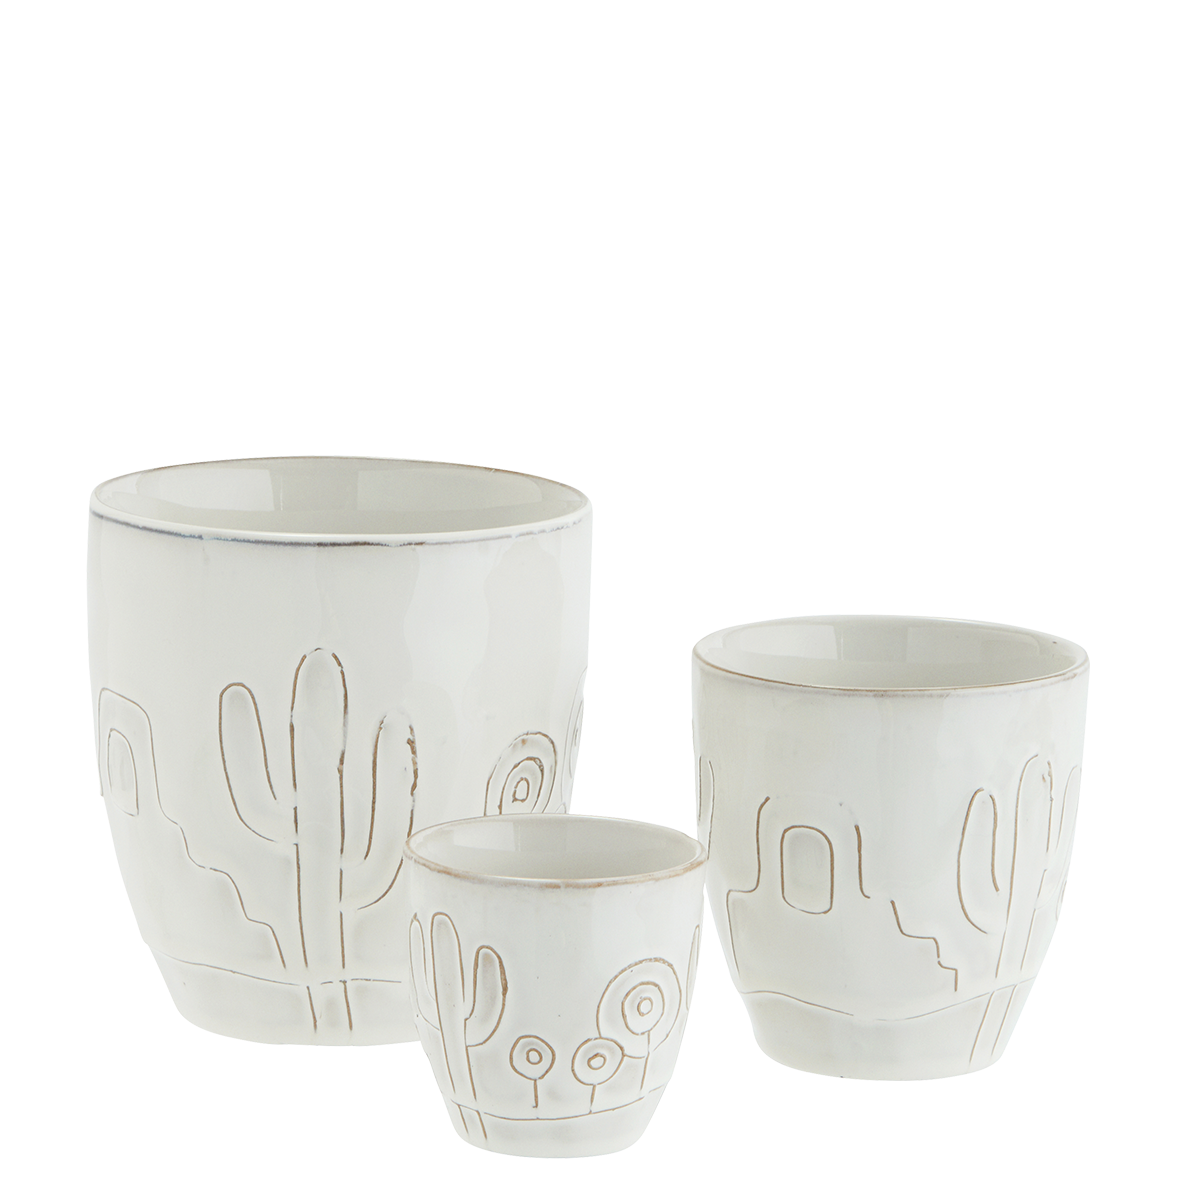 Stoneware flower pots